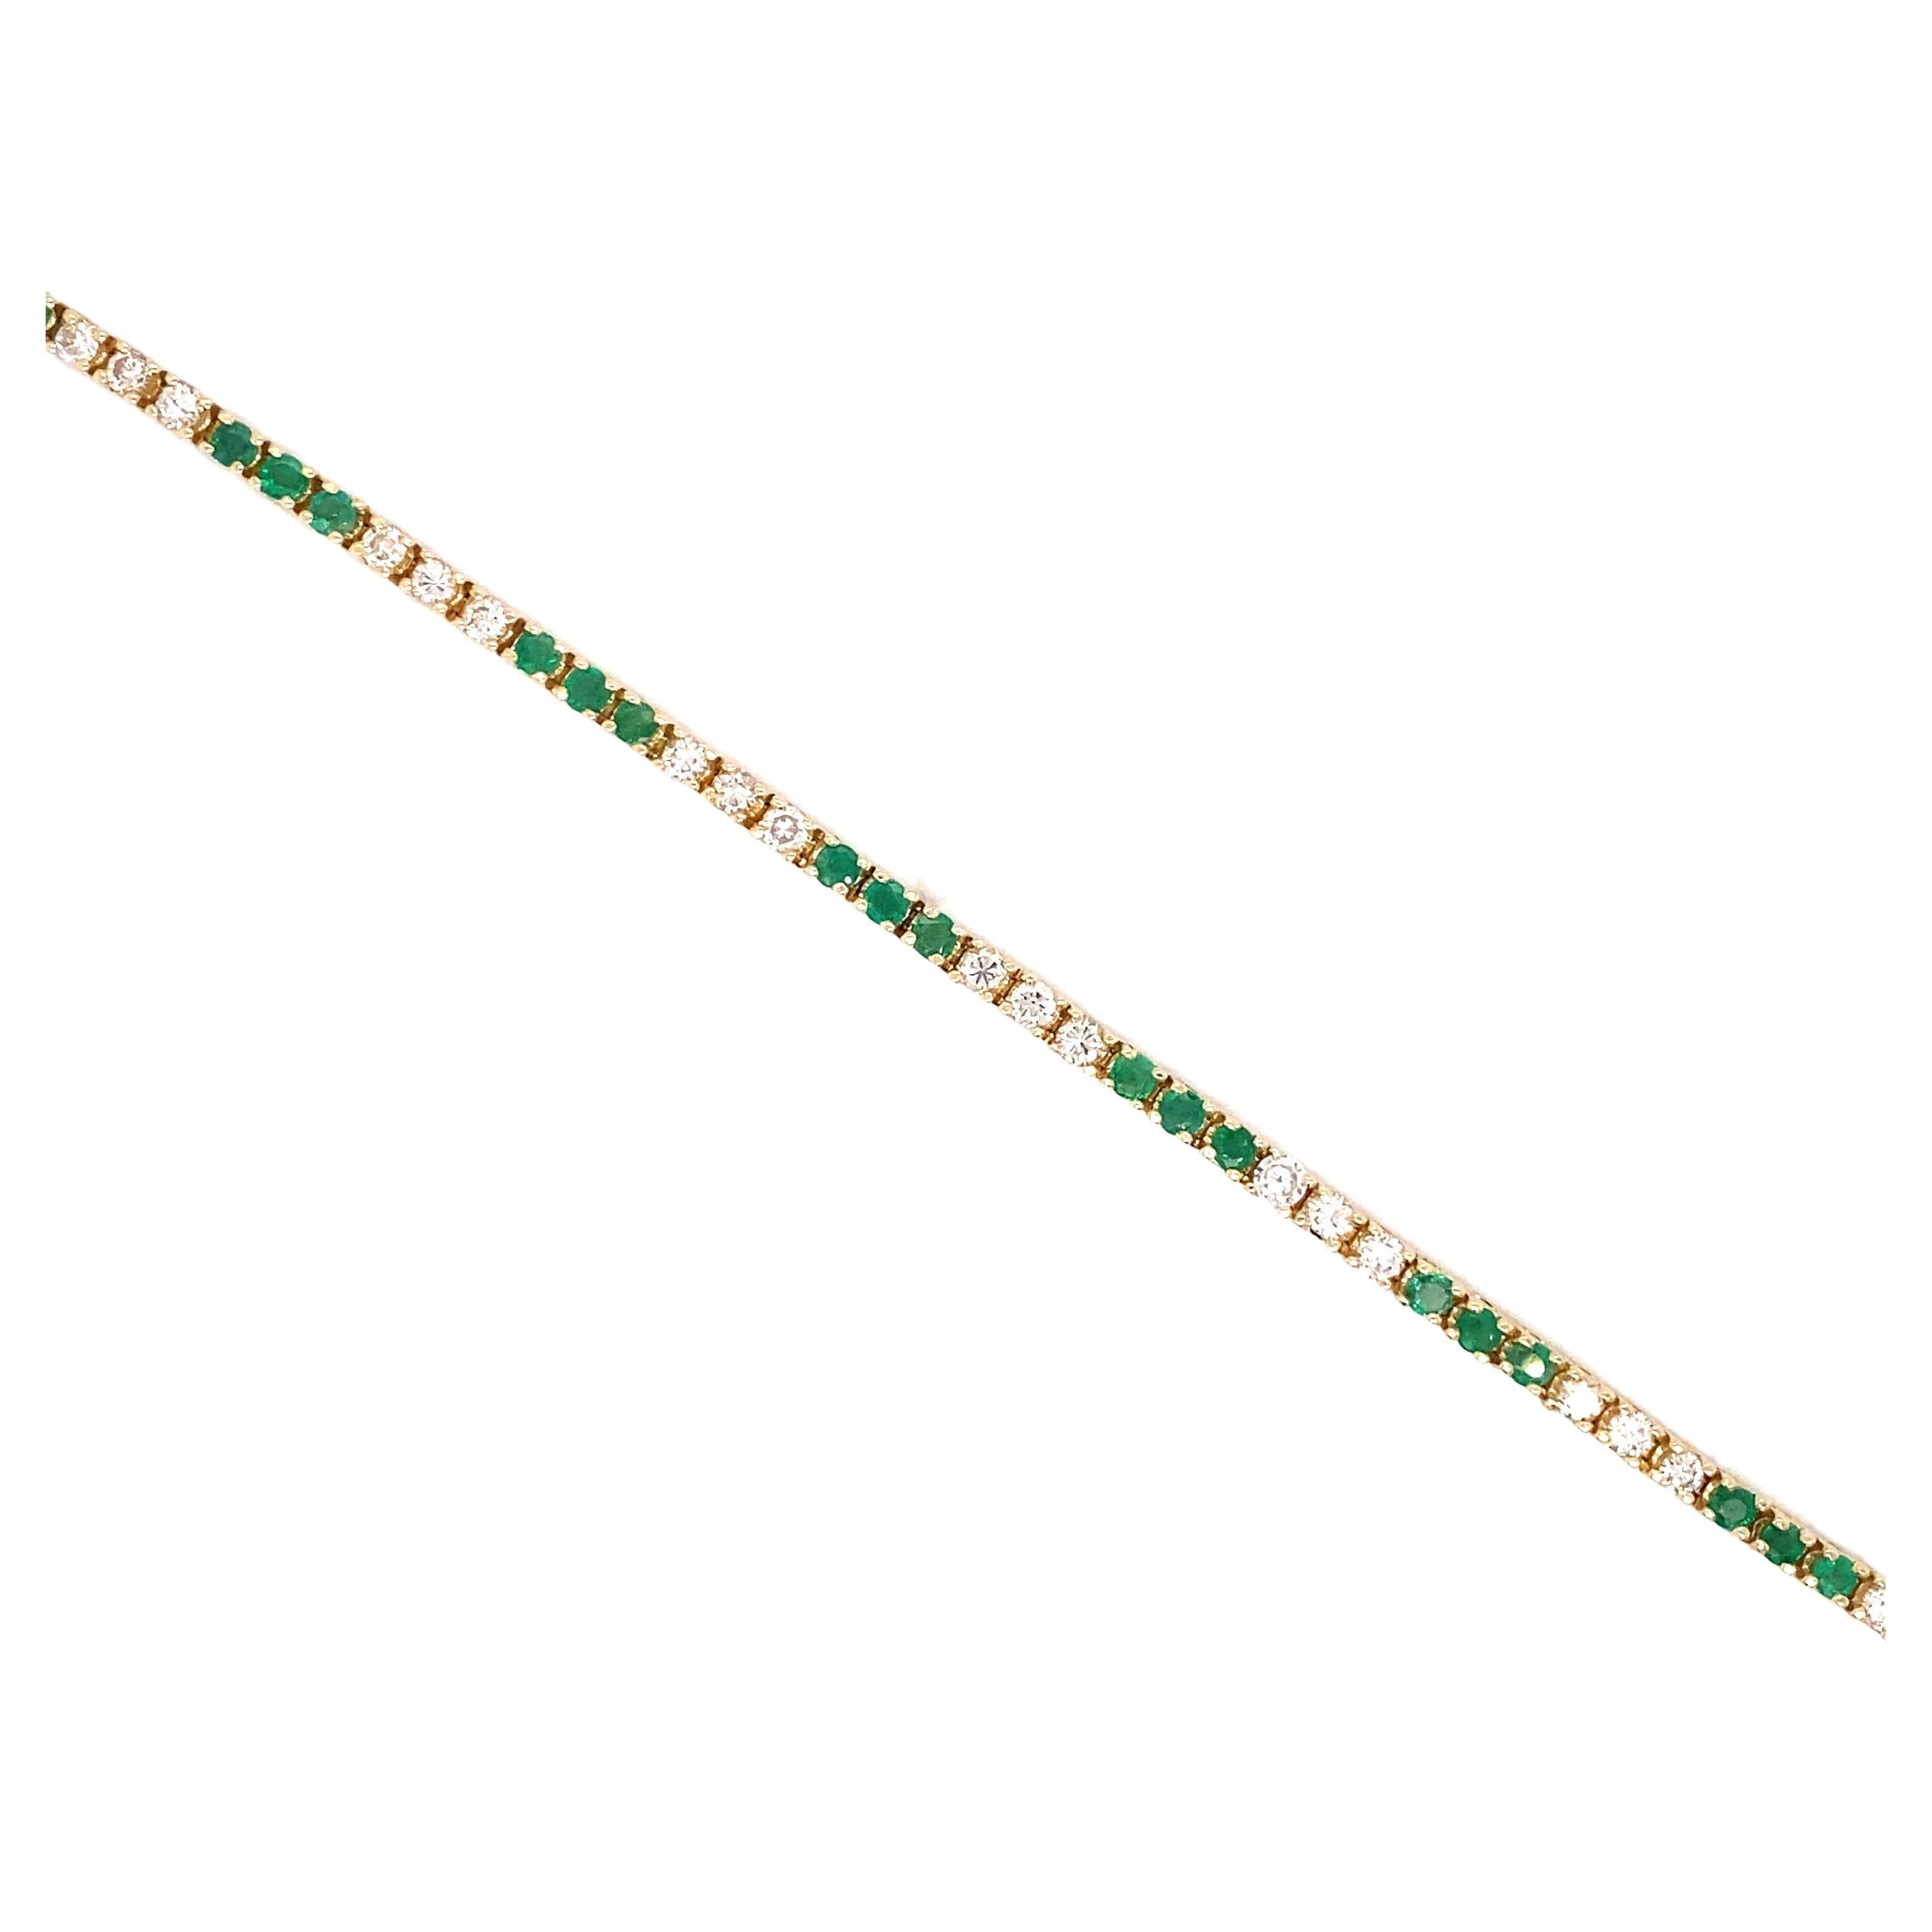 1 Carat Emerald and 1 Carat Diamond Tennis Bracelet in 14 Karat Gold